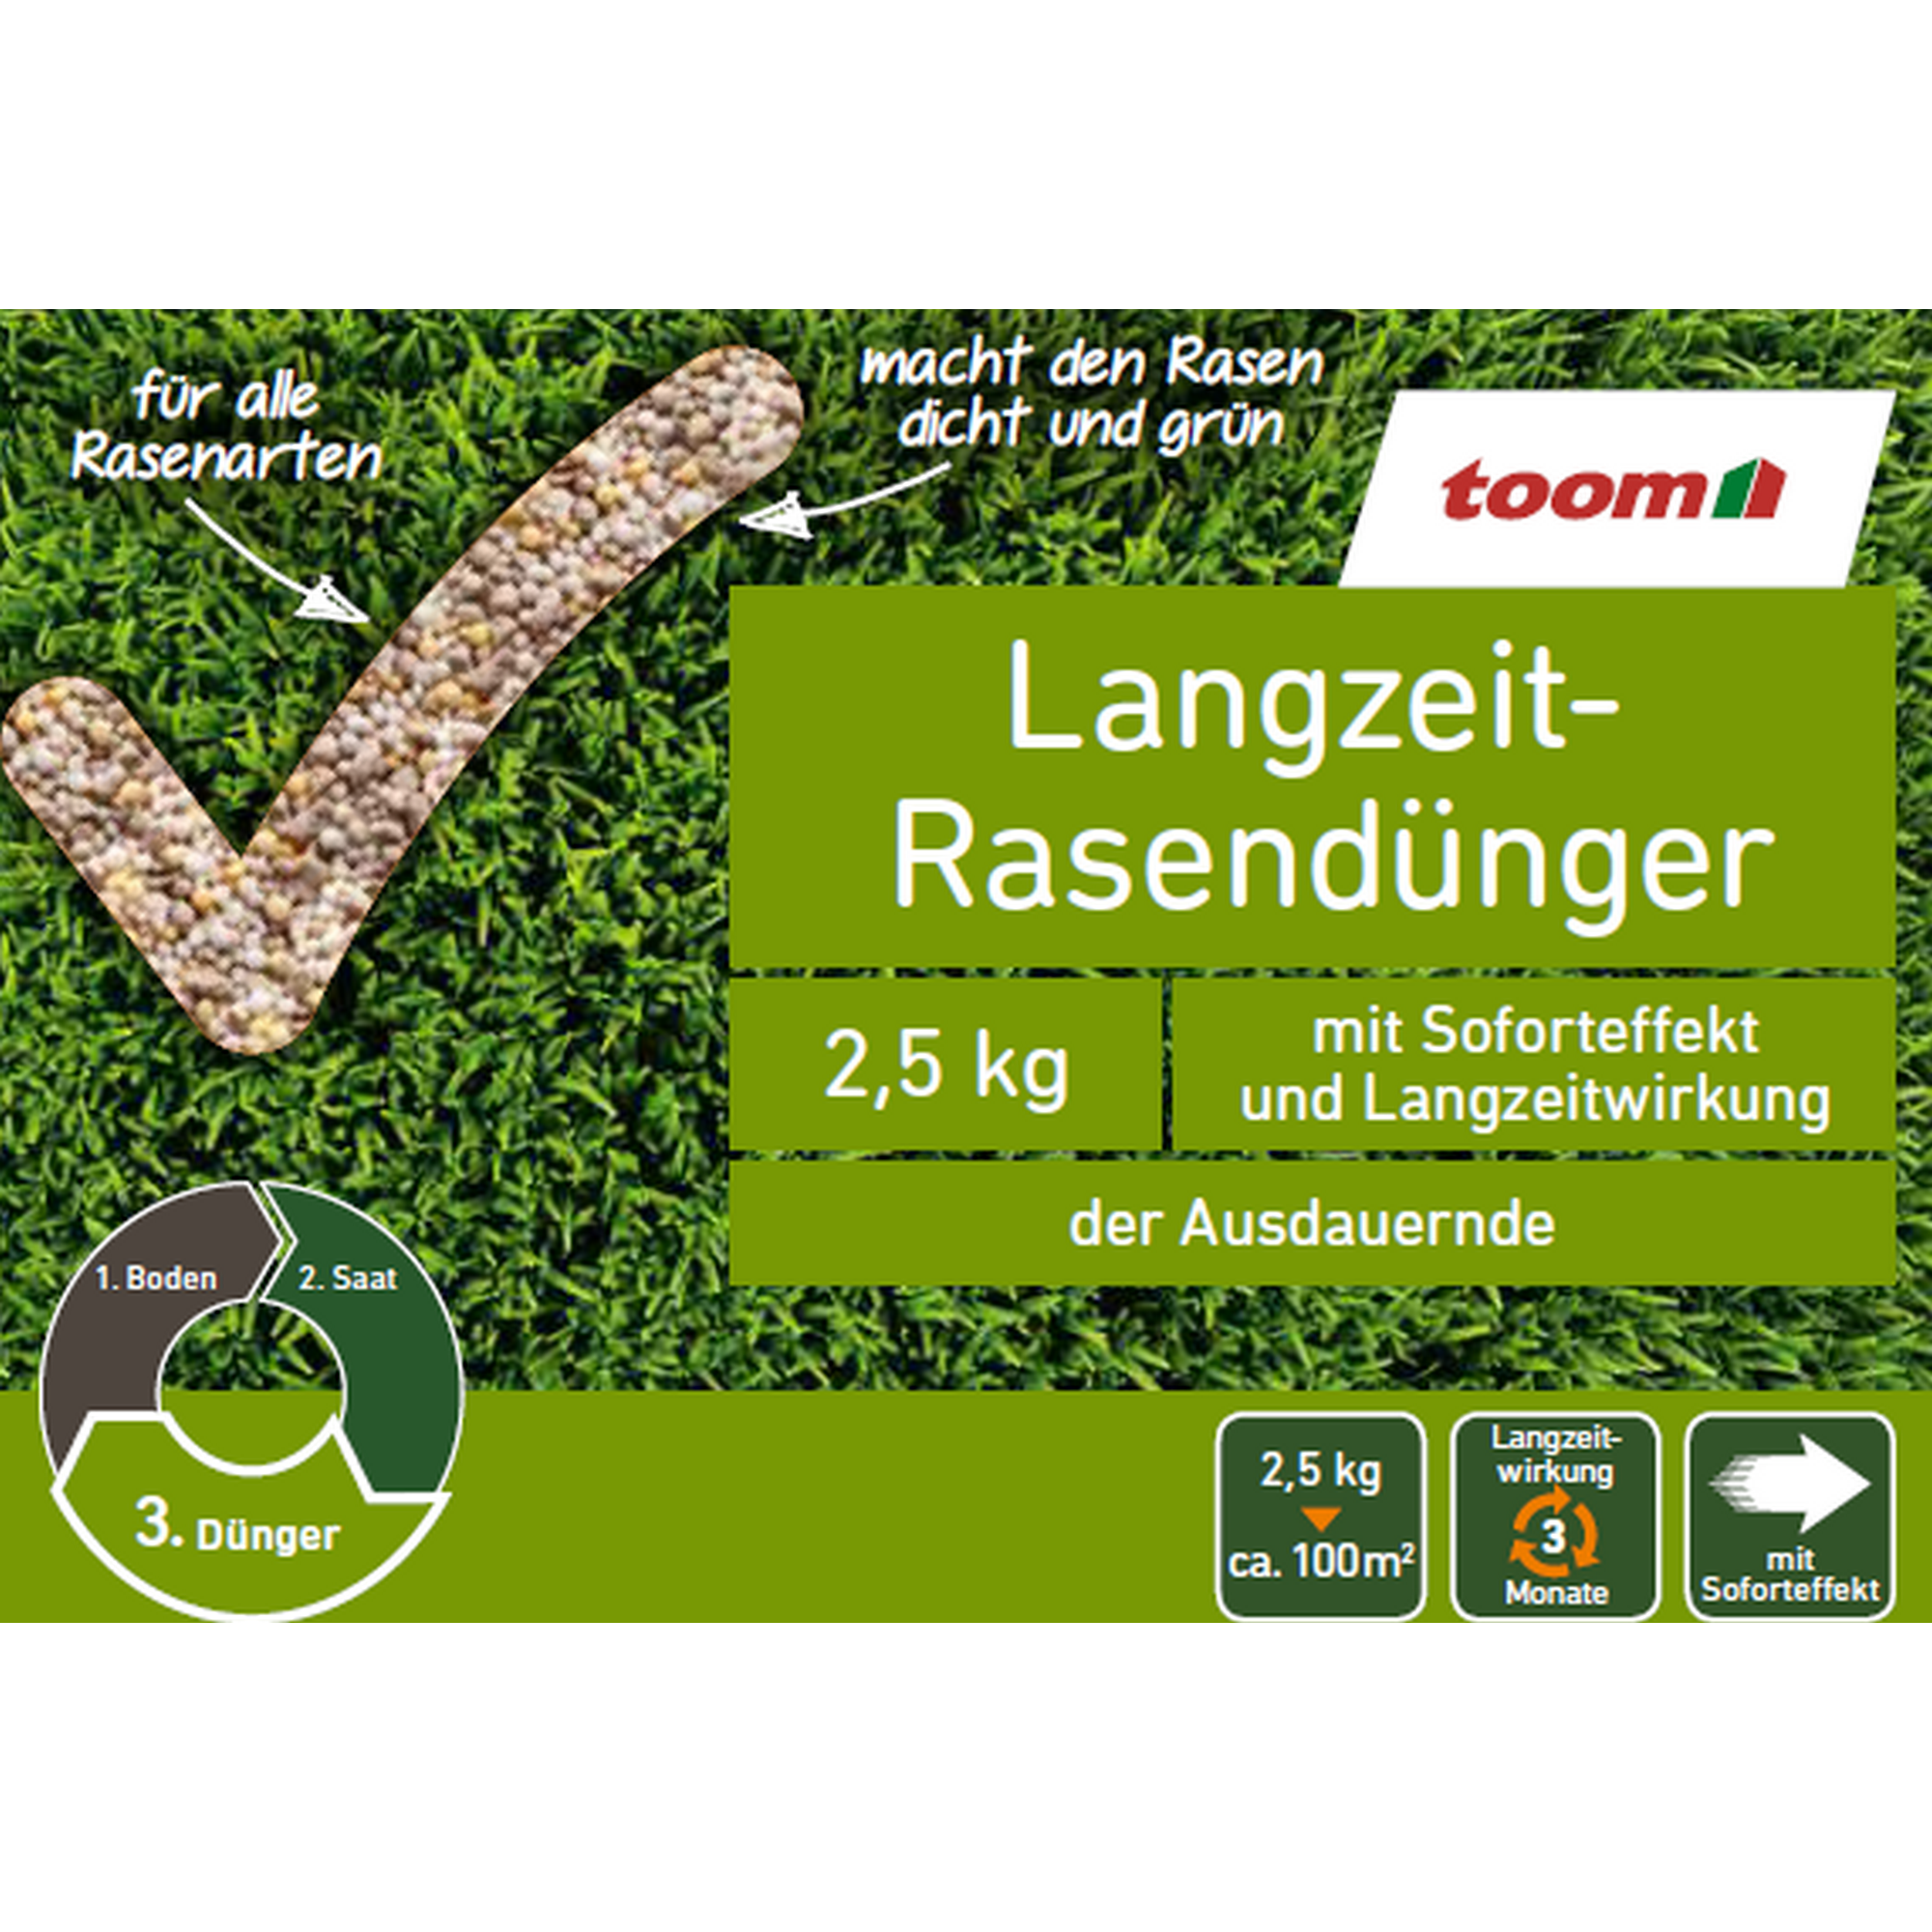 Langzeit-Rasendünger 2,5 kg + product picture